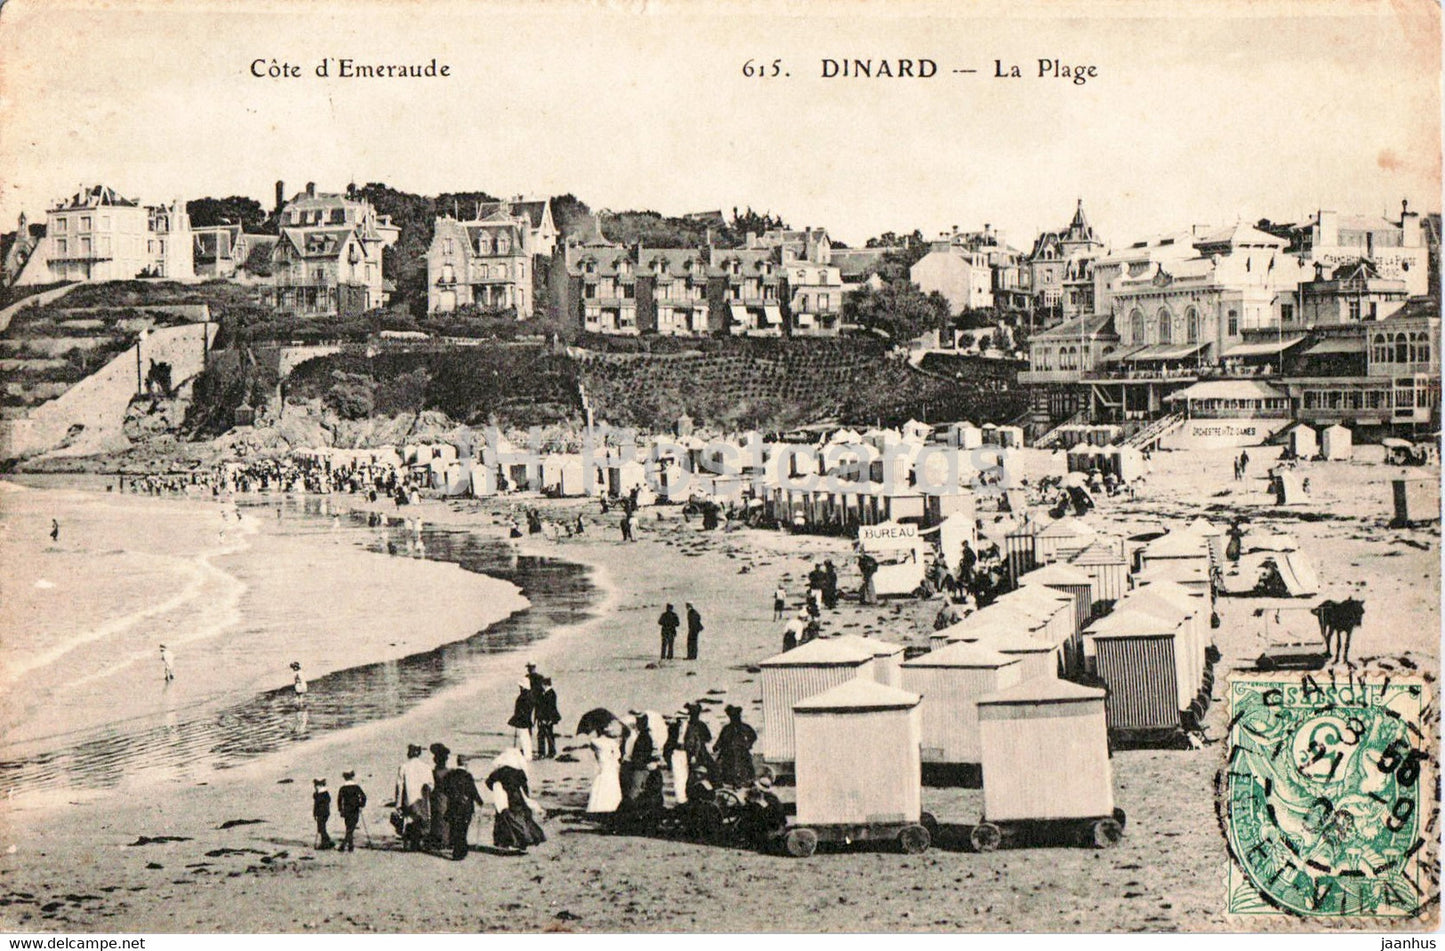 Dinard - La Plage - Cote d'Emeraude - beach - 615 - old postcard - France - used - JH Postcards